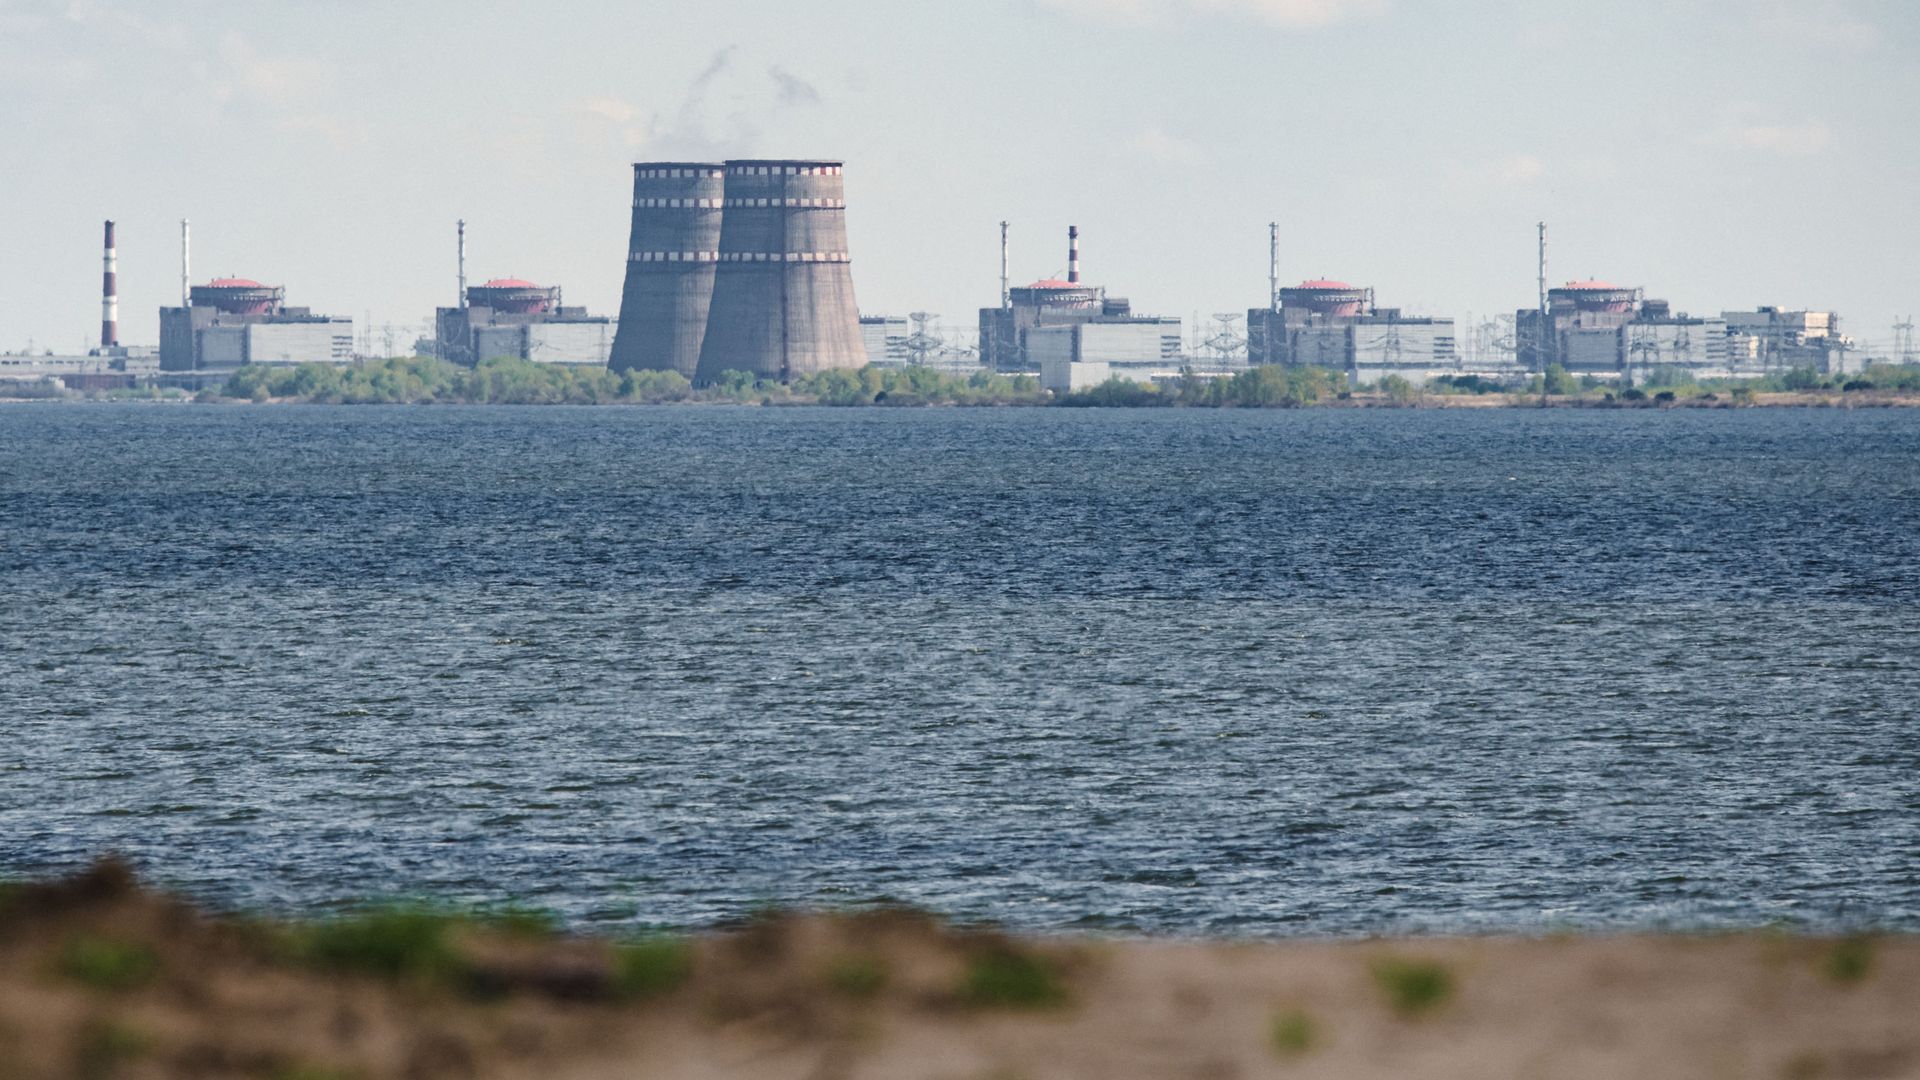 A view of the Zaporizhzhia nuclear power plant near the Russia-occupied Ukrainian town of Enerhodar in April 2022.